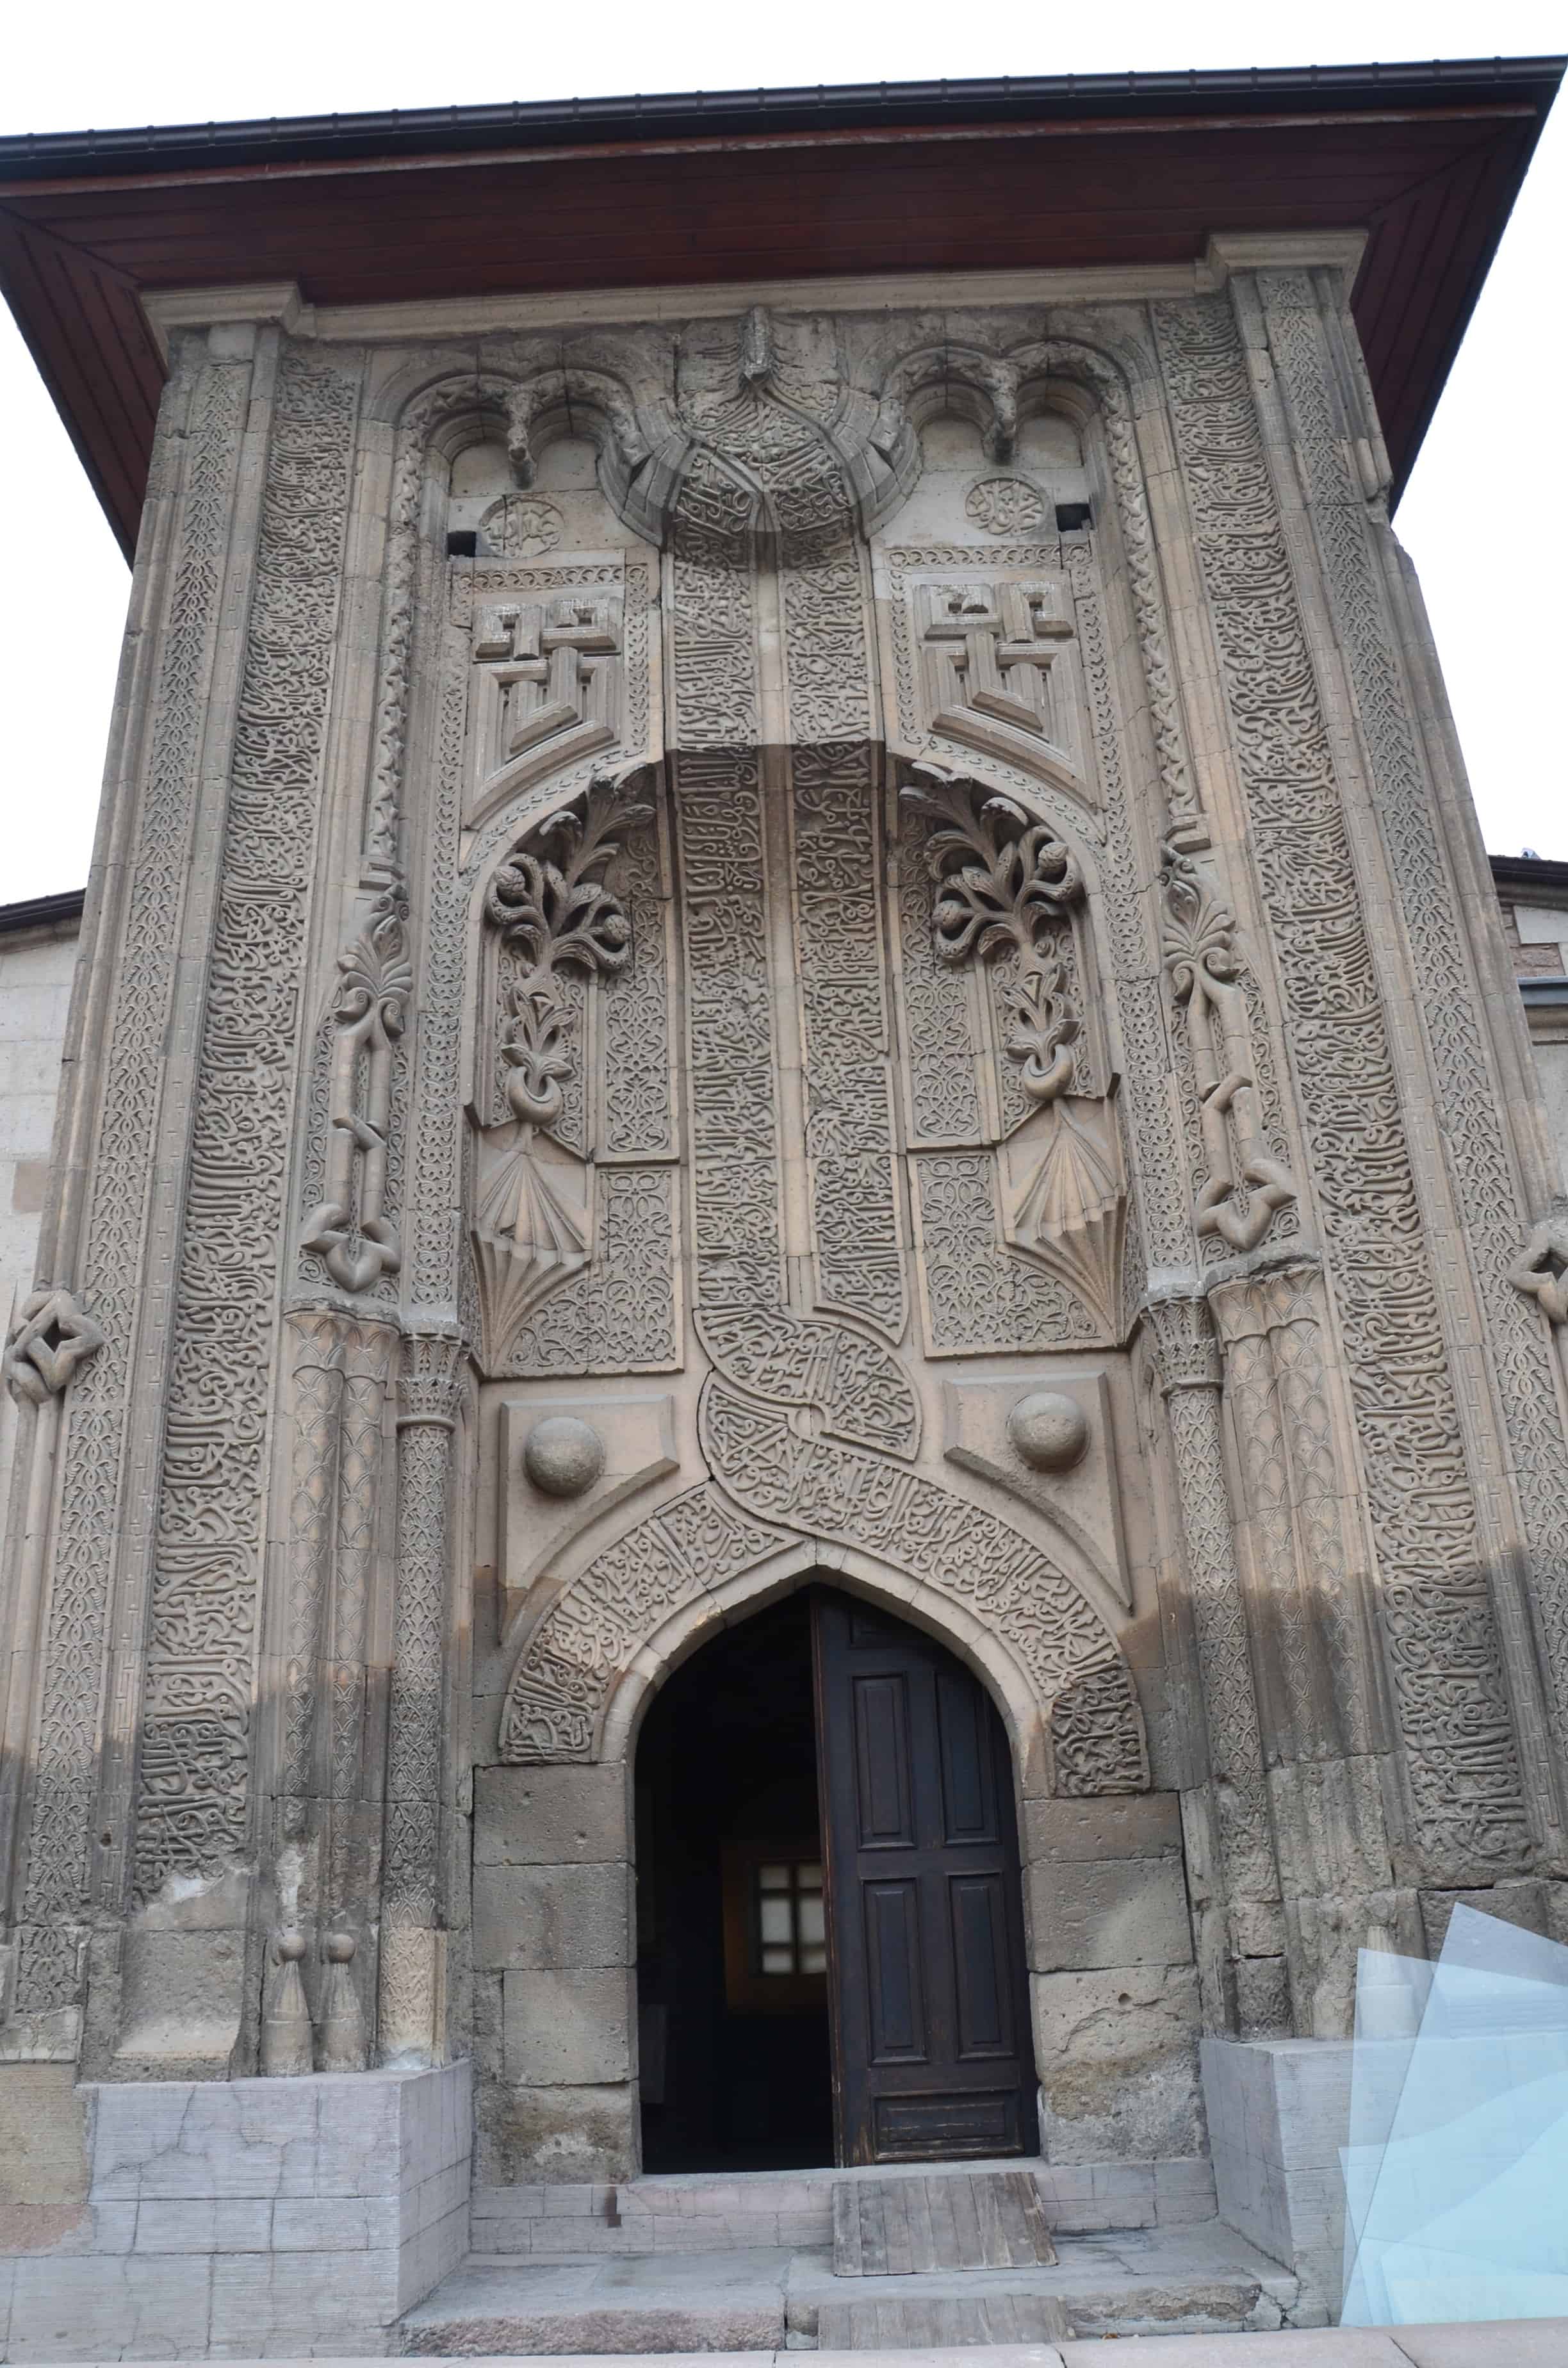 Entrance to the Ince Minareli Madrasa